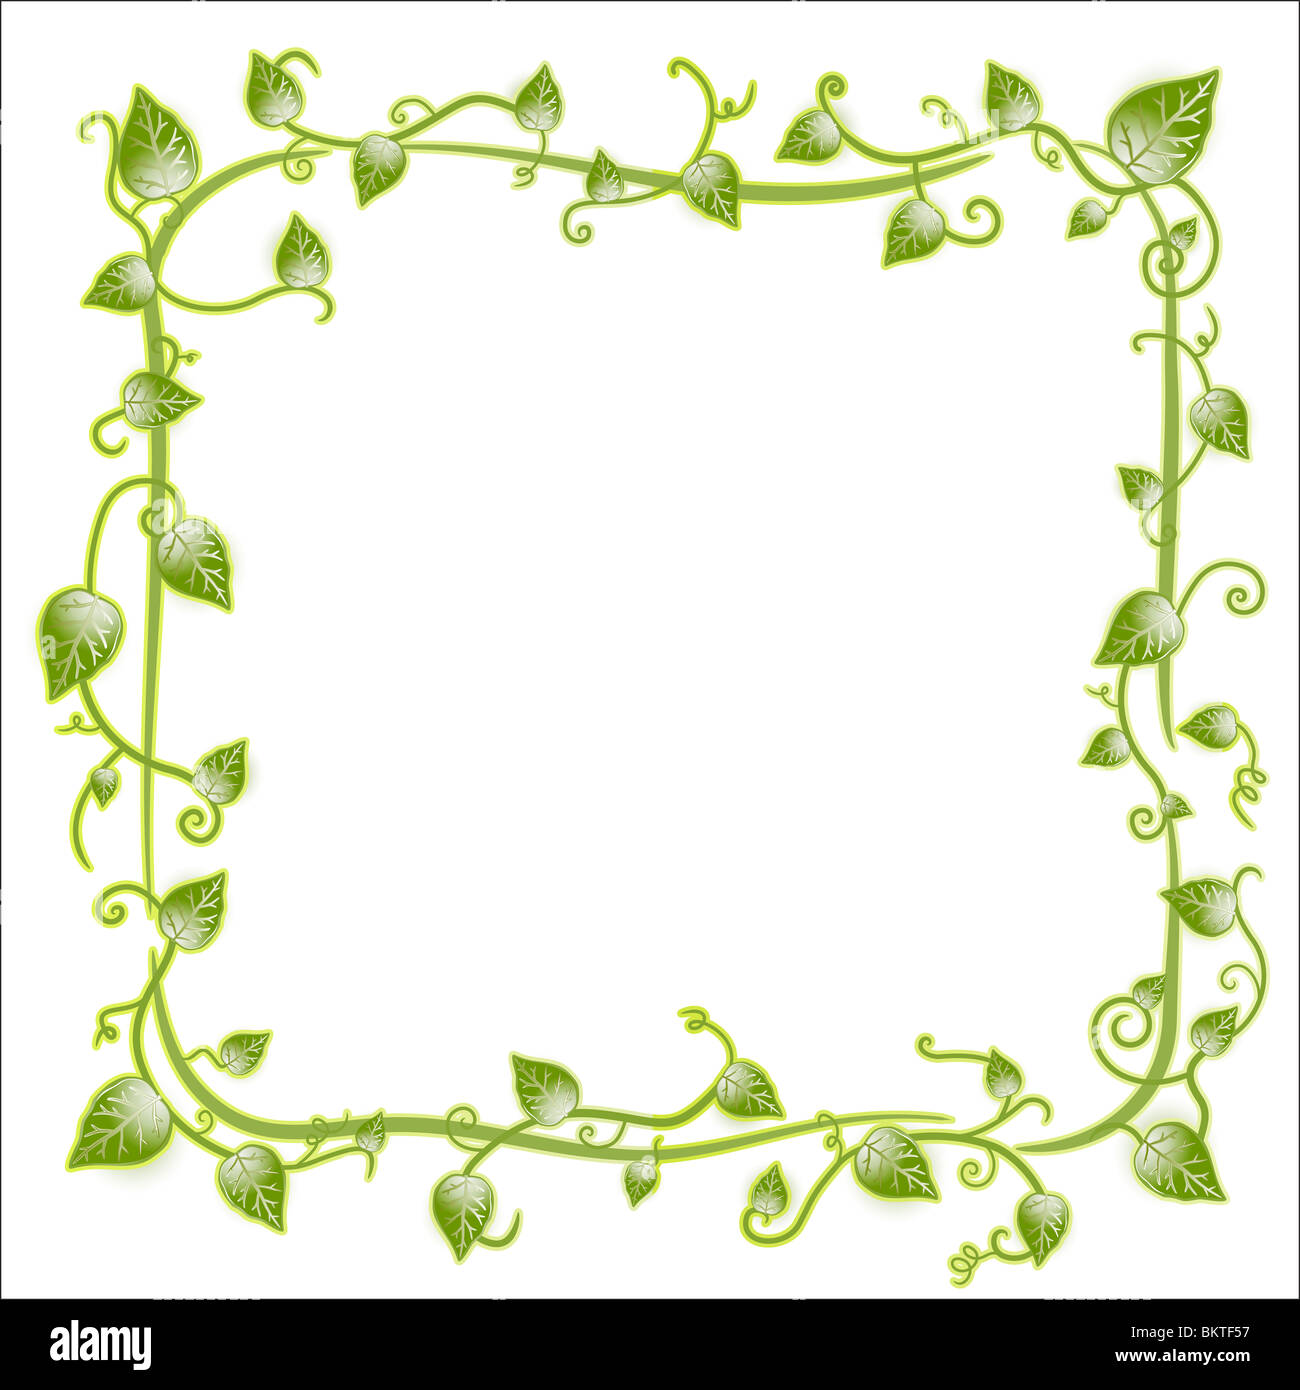 Vector illustration of a vintage floral leaf frame with modern curls and vines. Stock Photo